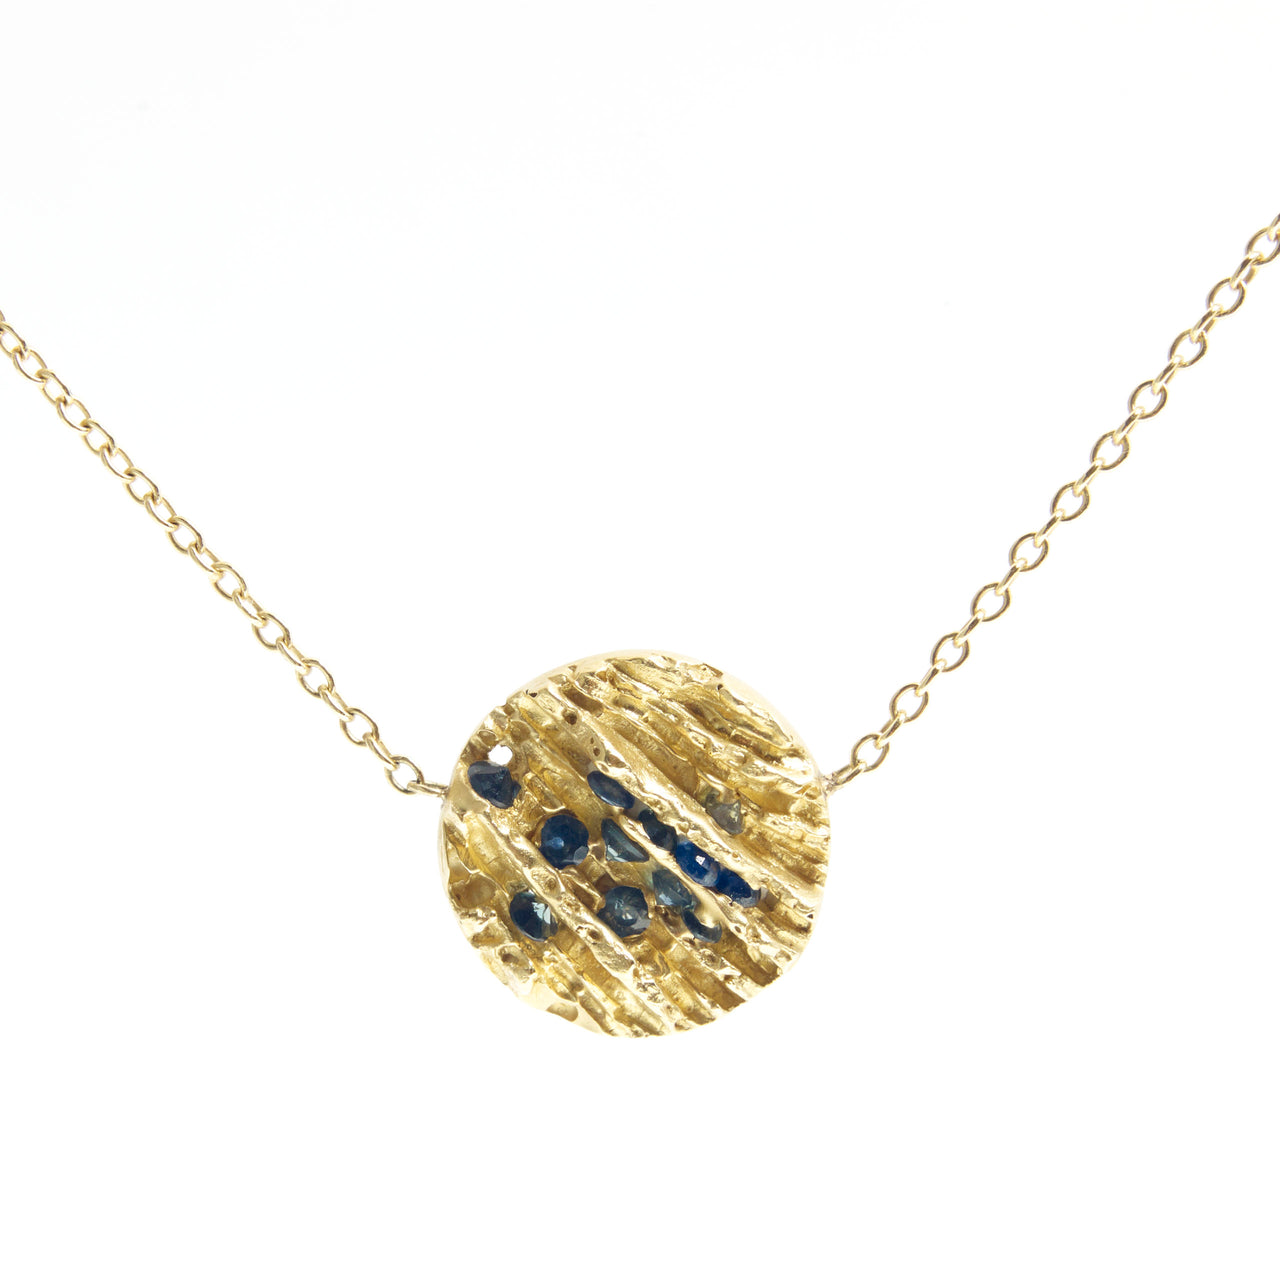 Hartland Gold & Sapphire Pendant